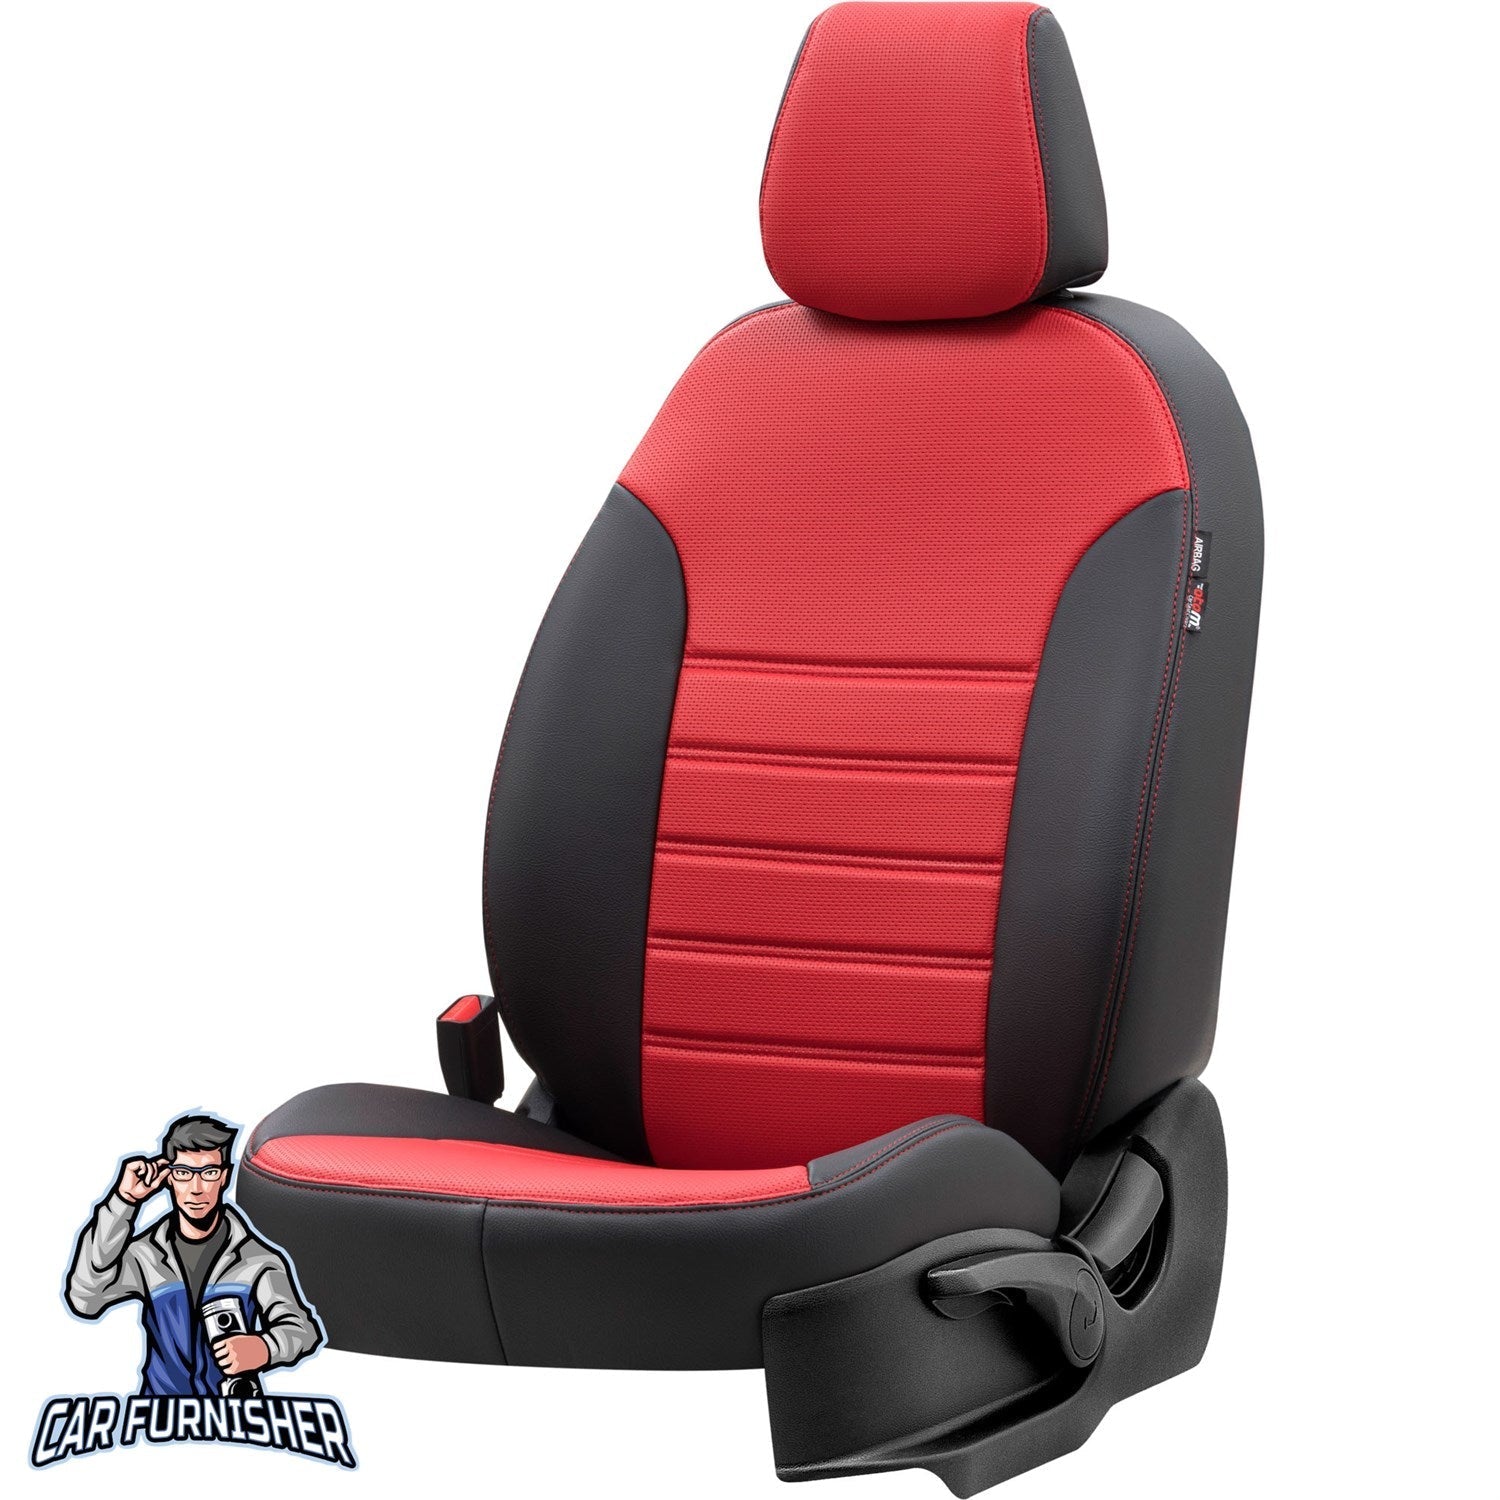 Chery Tiggo Car Seat Covers 2008-2011 New York Design Red Full Set (5 Seats + Handrest) Leather & Fabric